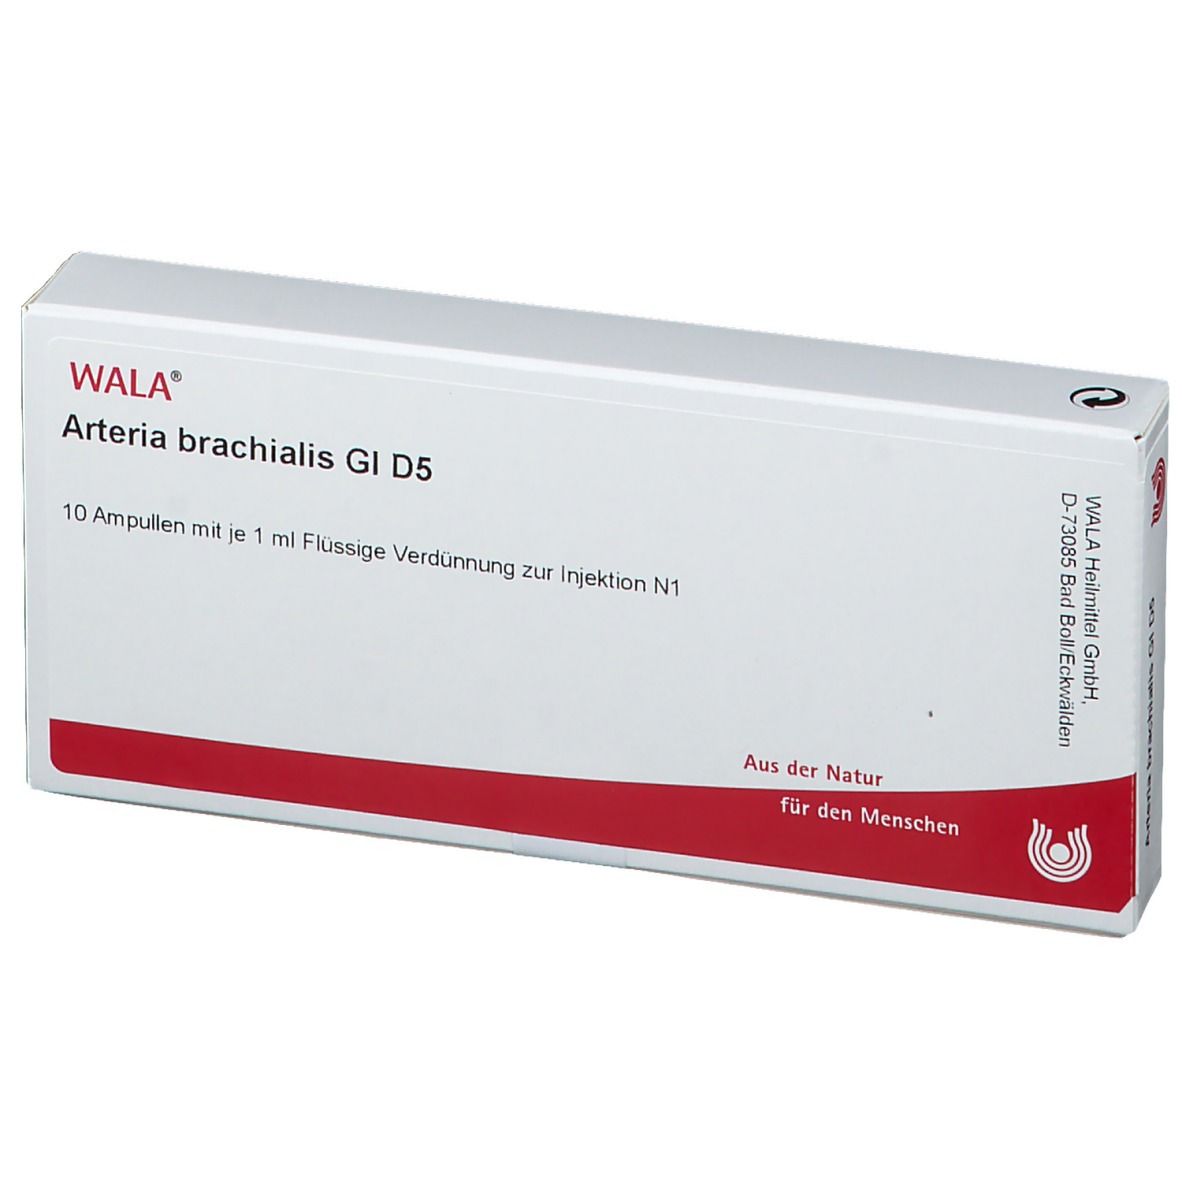 WALA® Arteria brachialis Gl D 5